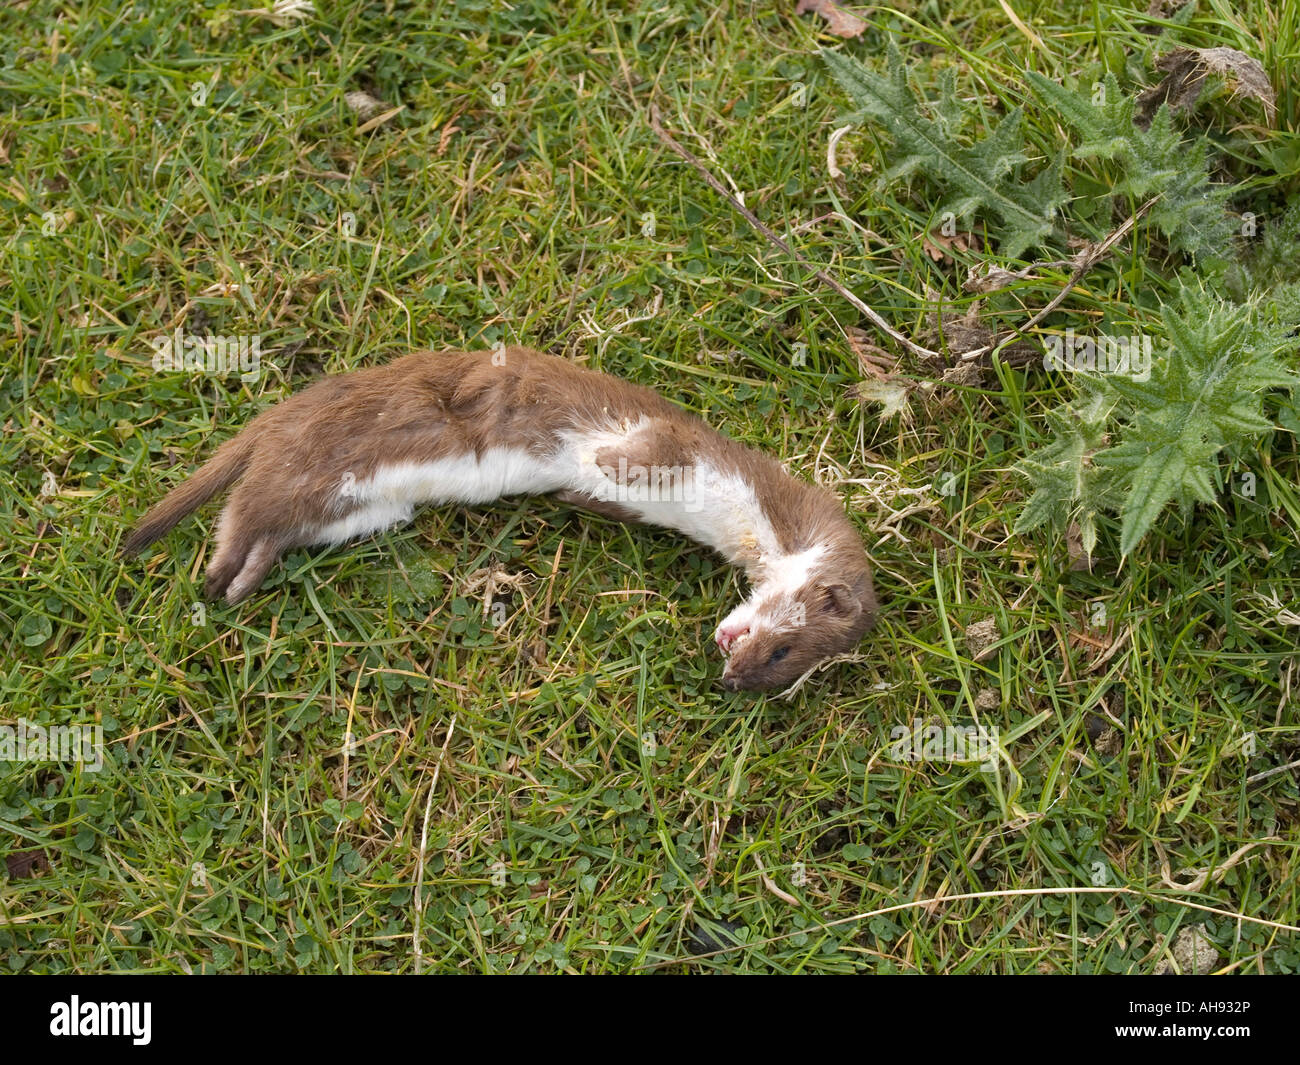 Dead stoat Mustela erminea lying on grass Stock Photo